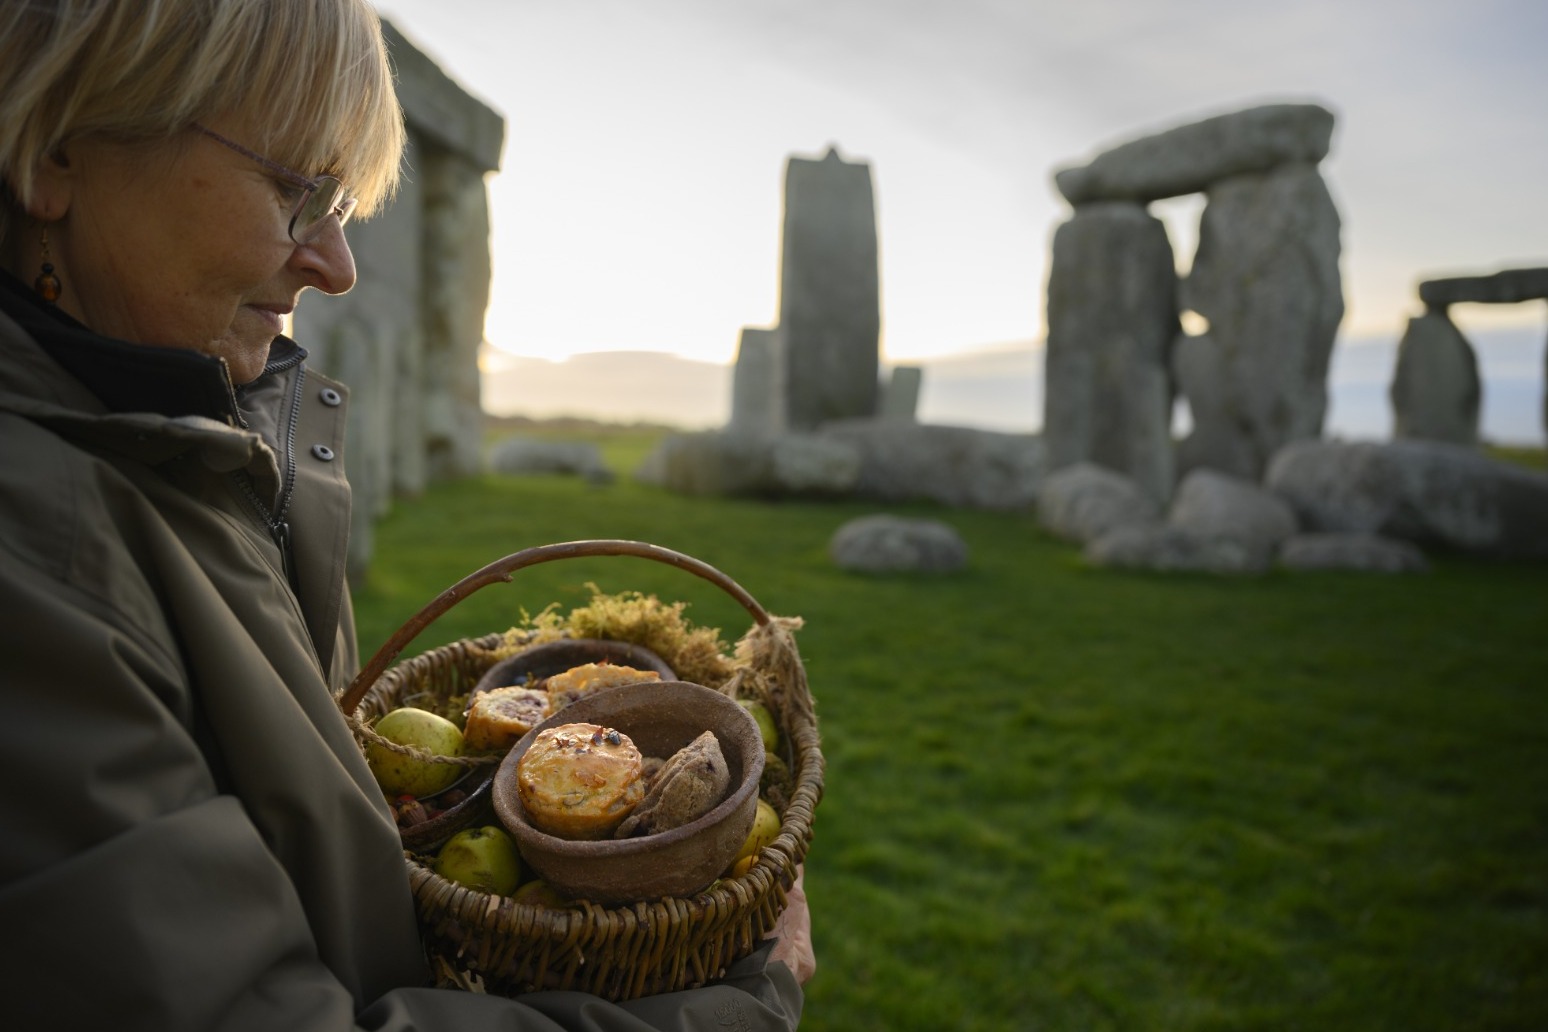 Stonehenge builders fuelled themselves on sweet treats 